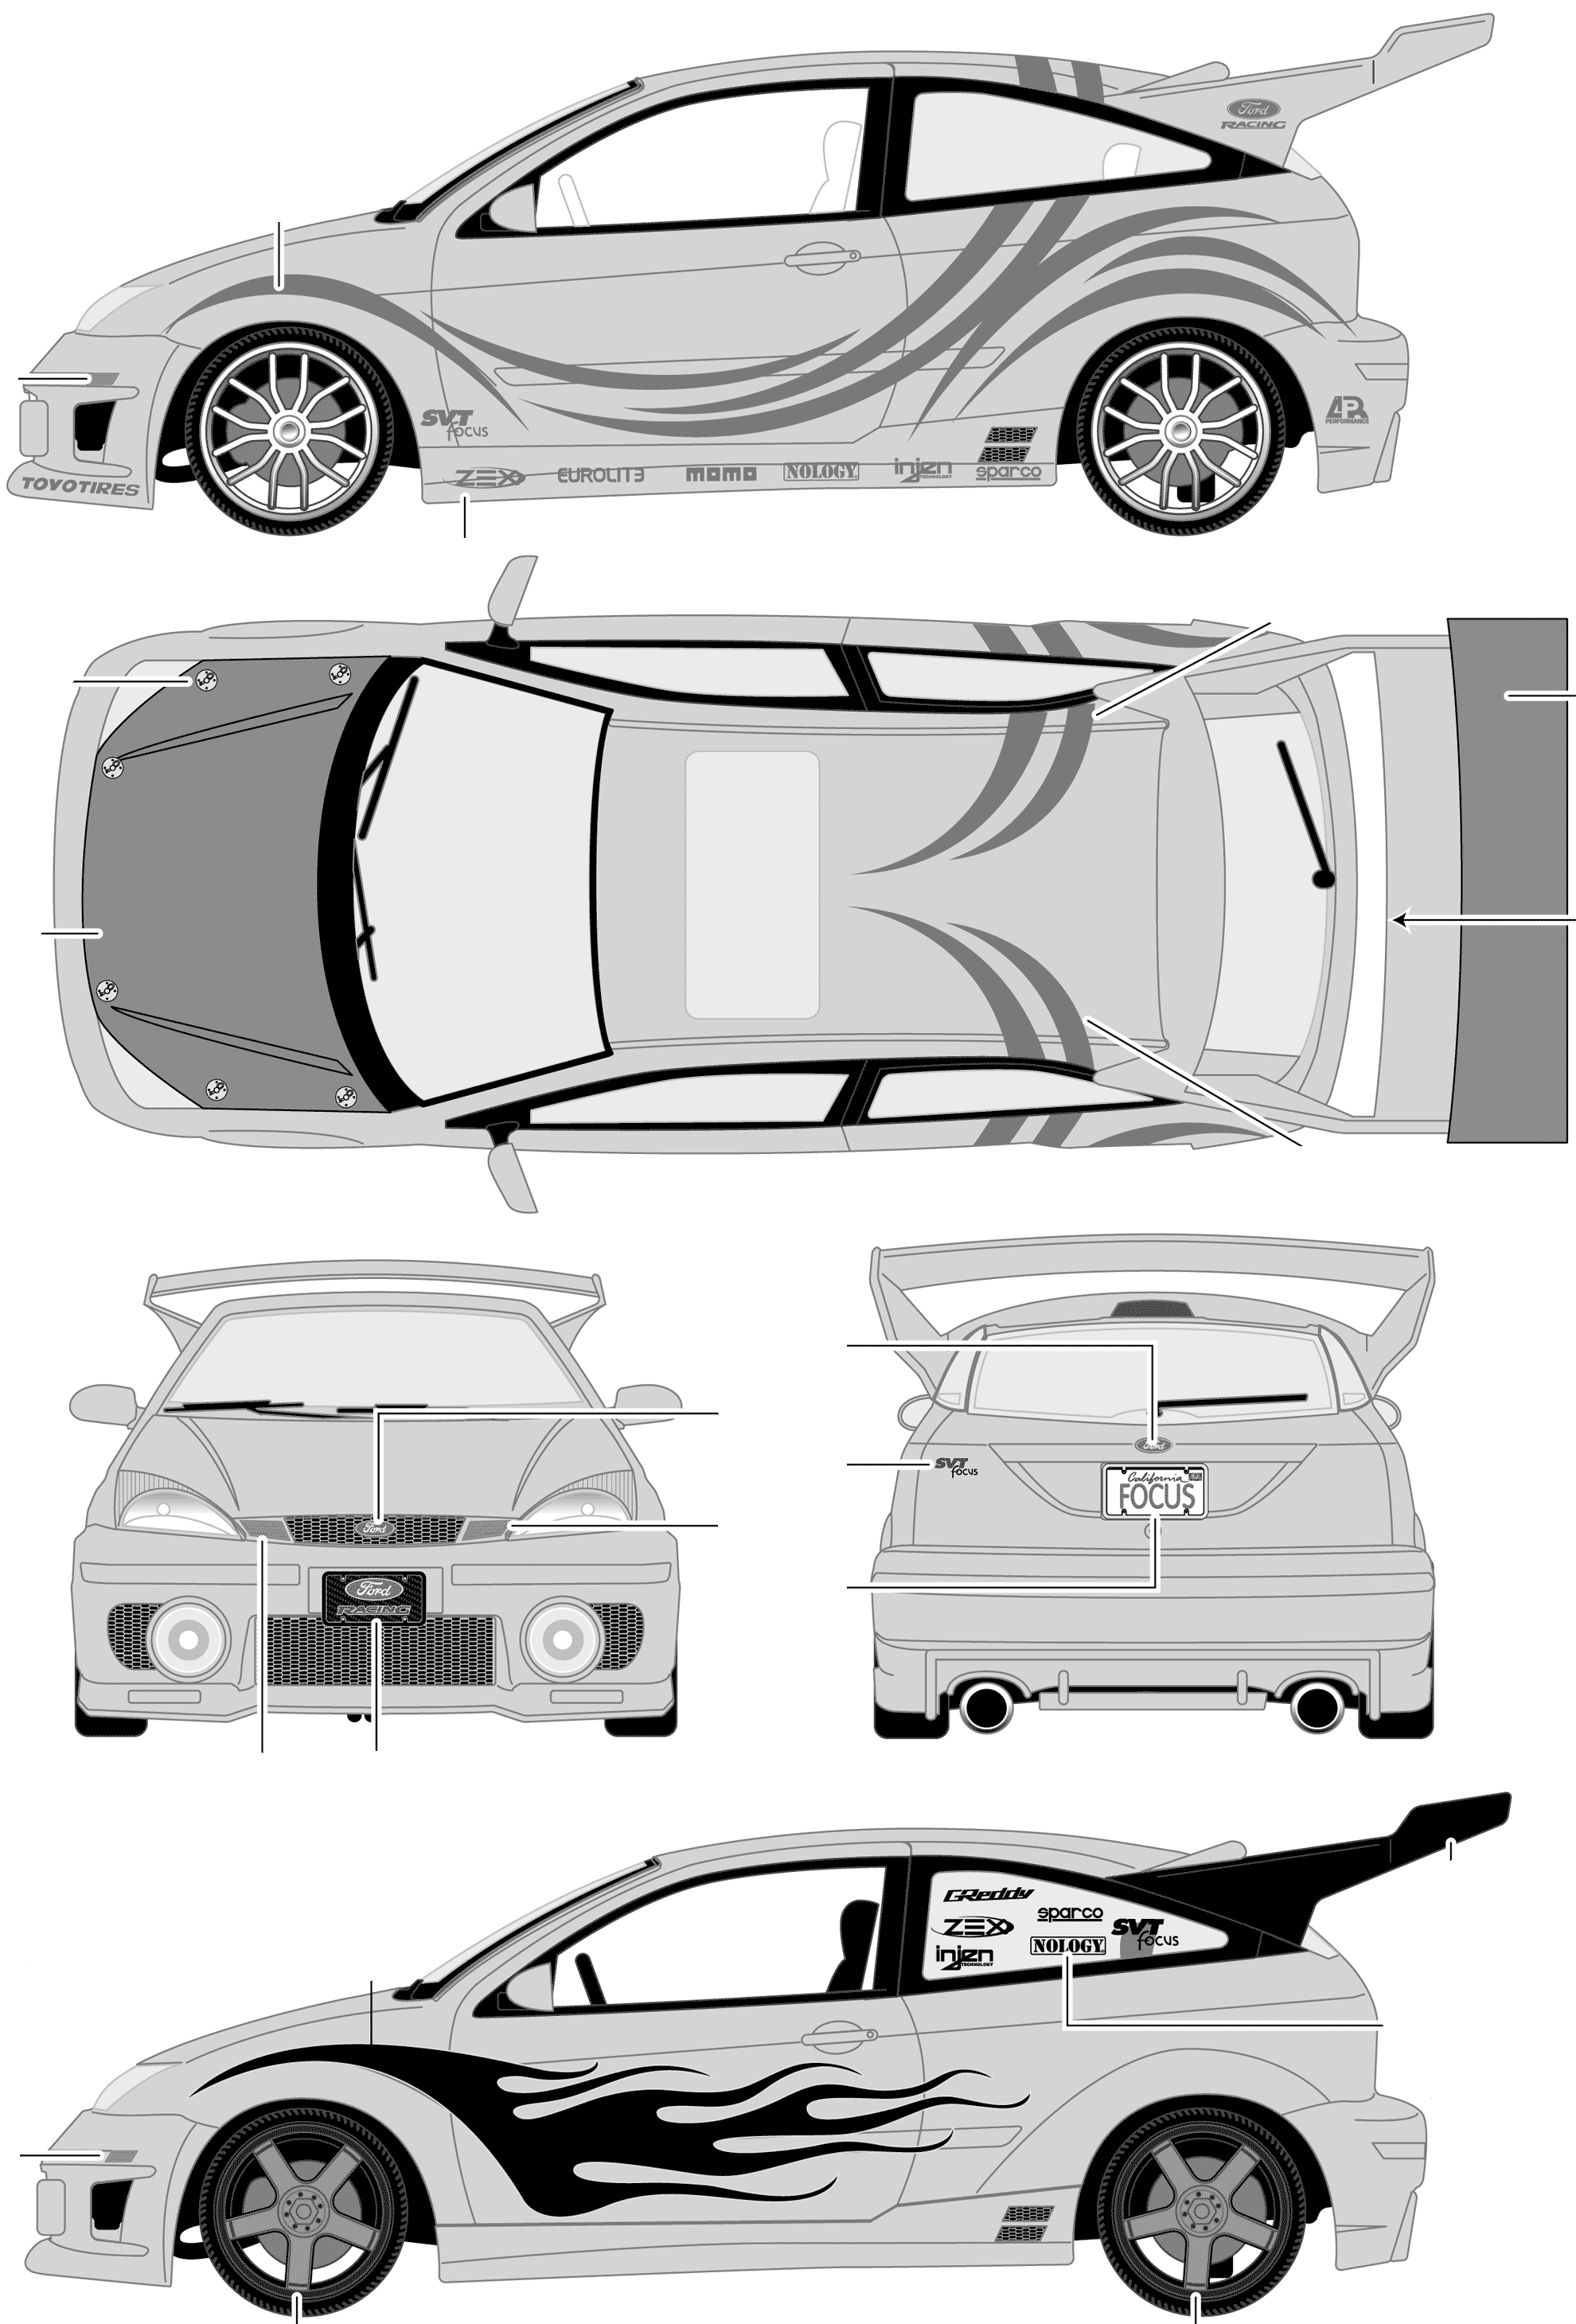 Ford SVT Focus blueprint